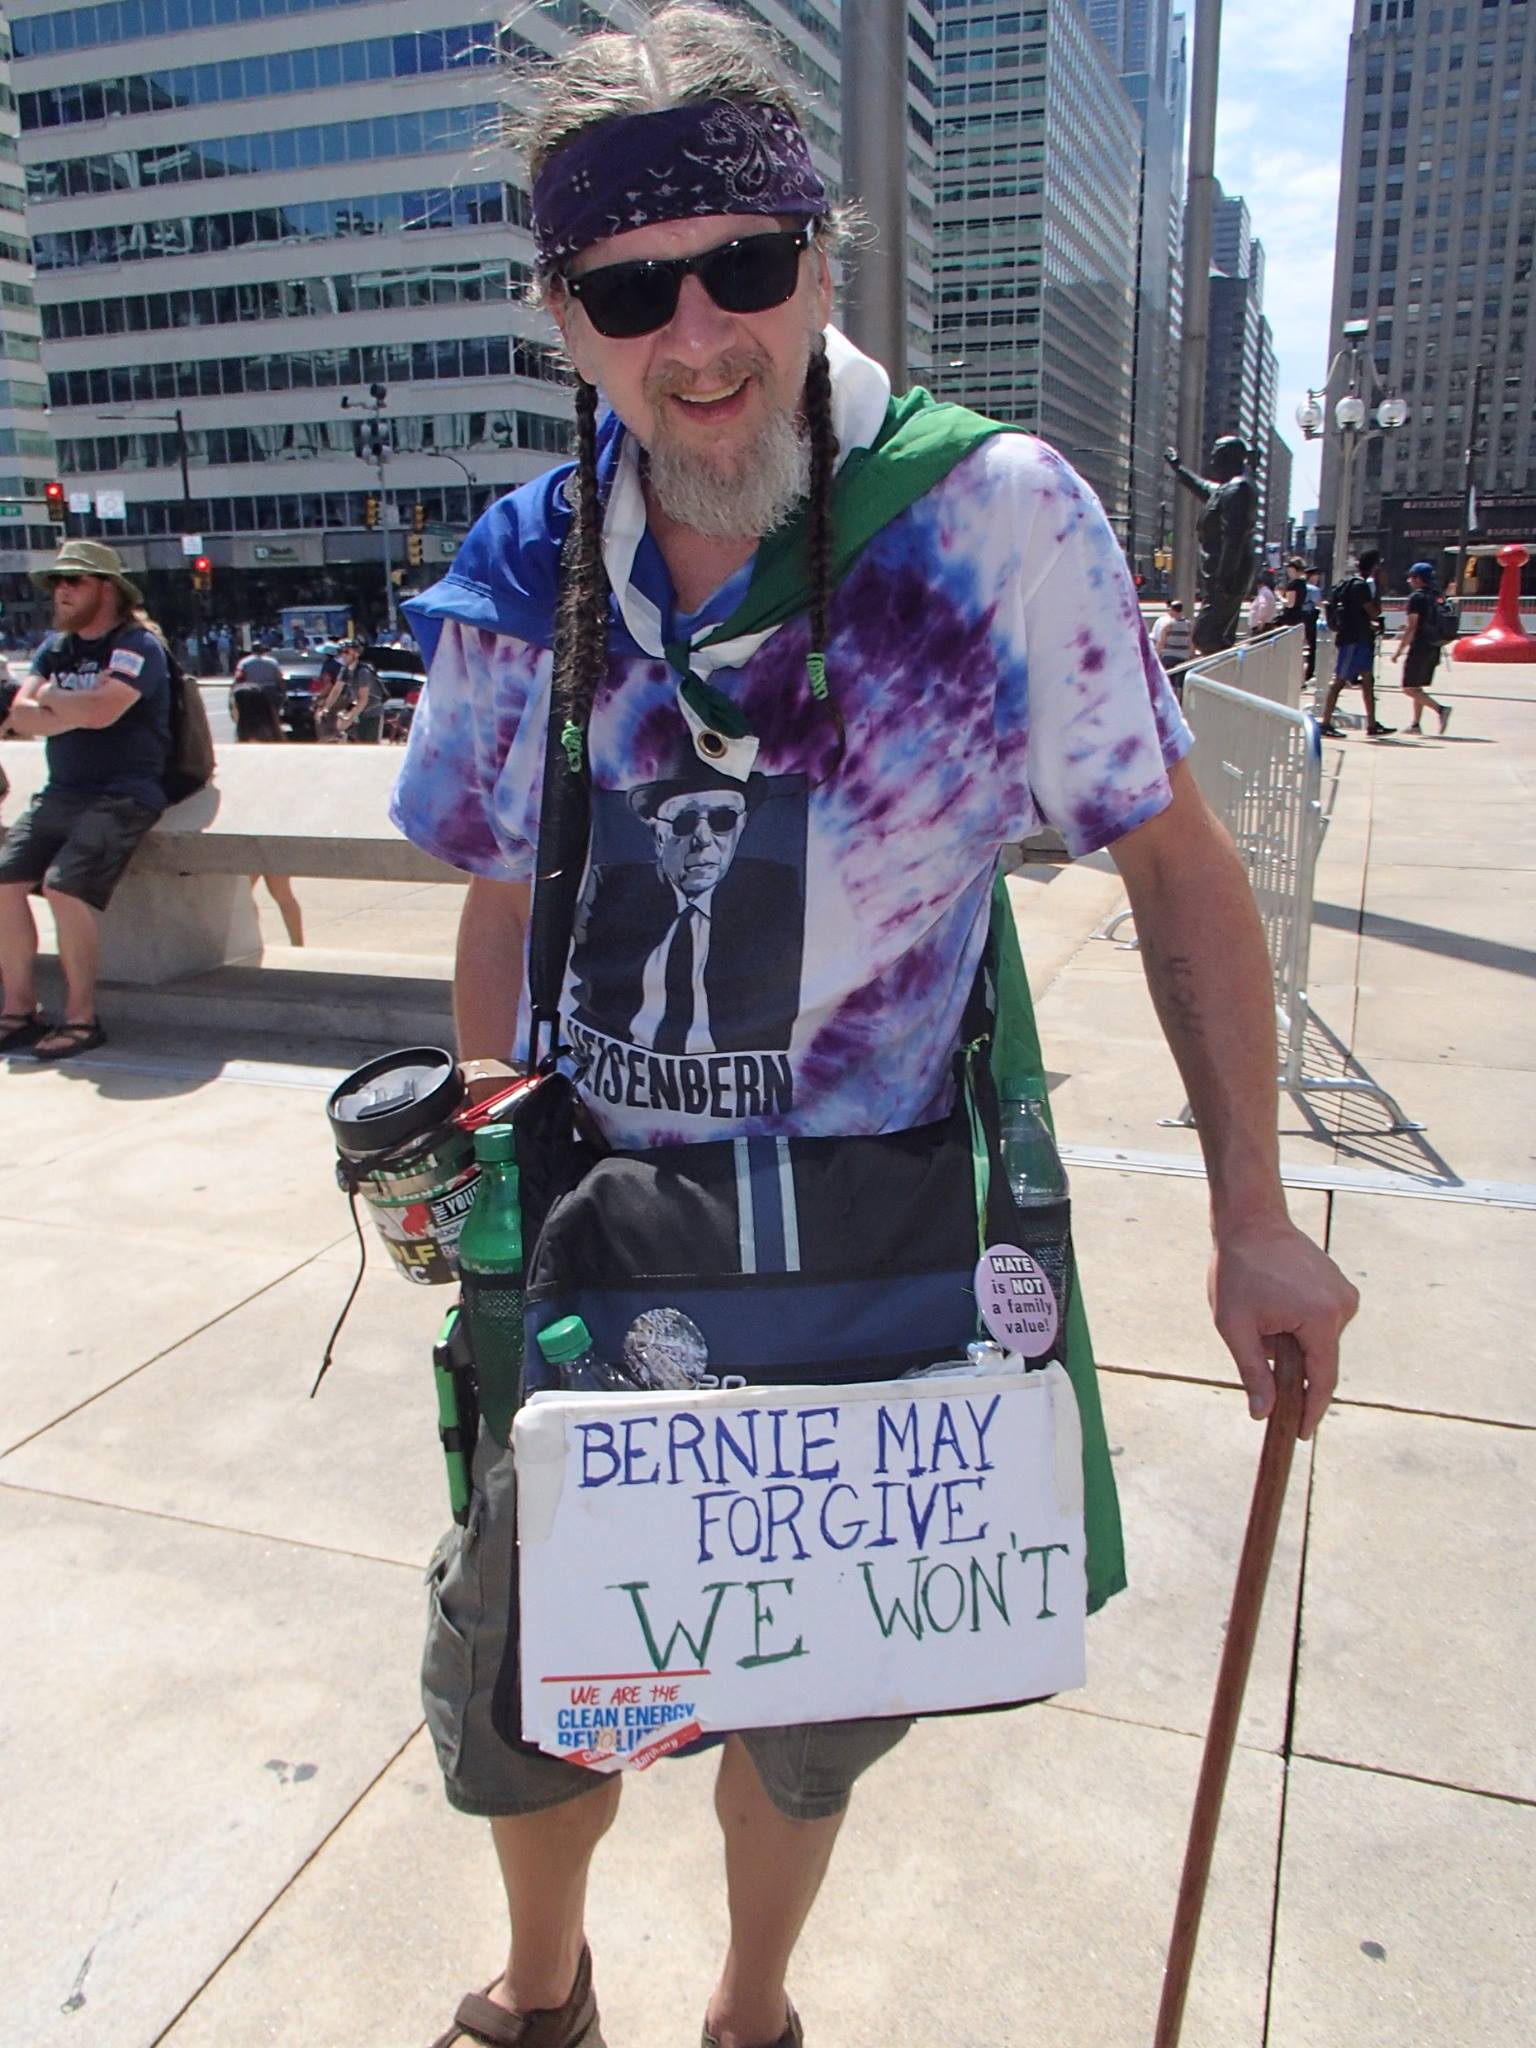 A diehard Sanders supporter.